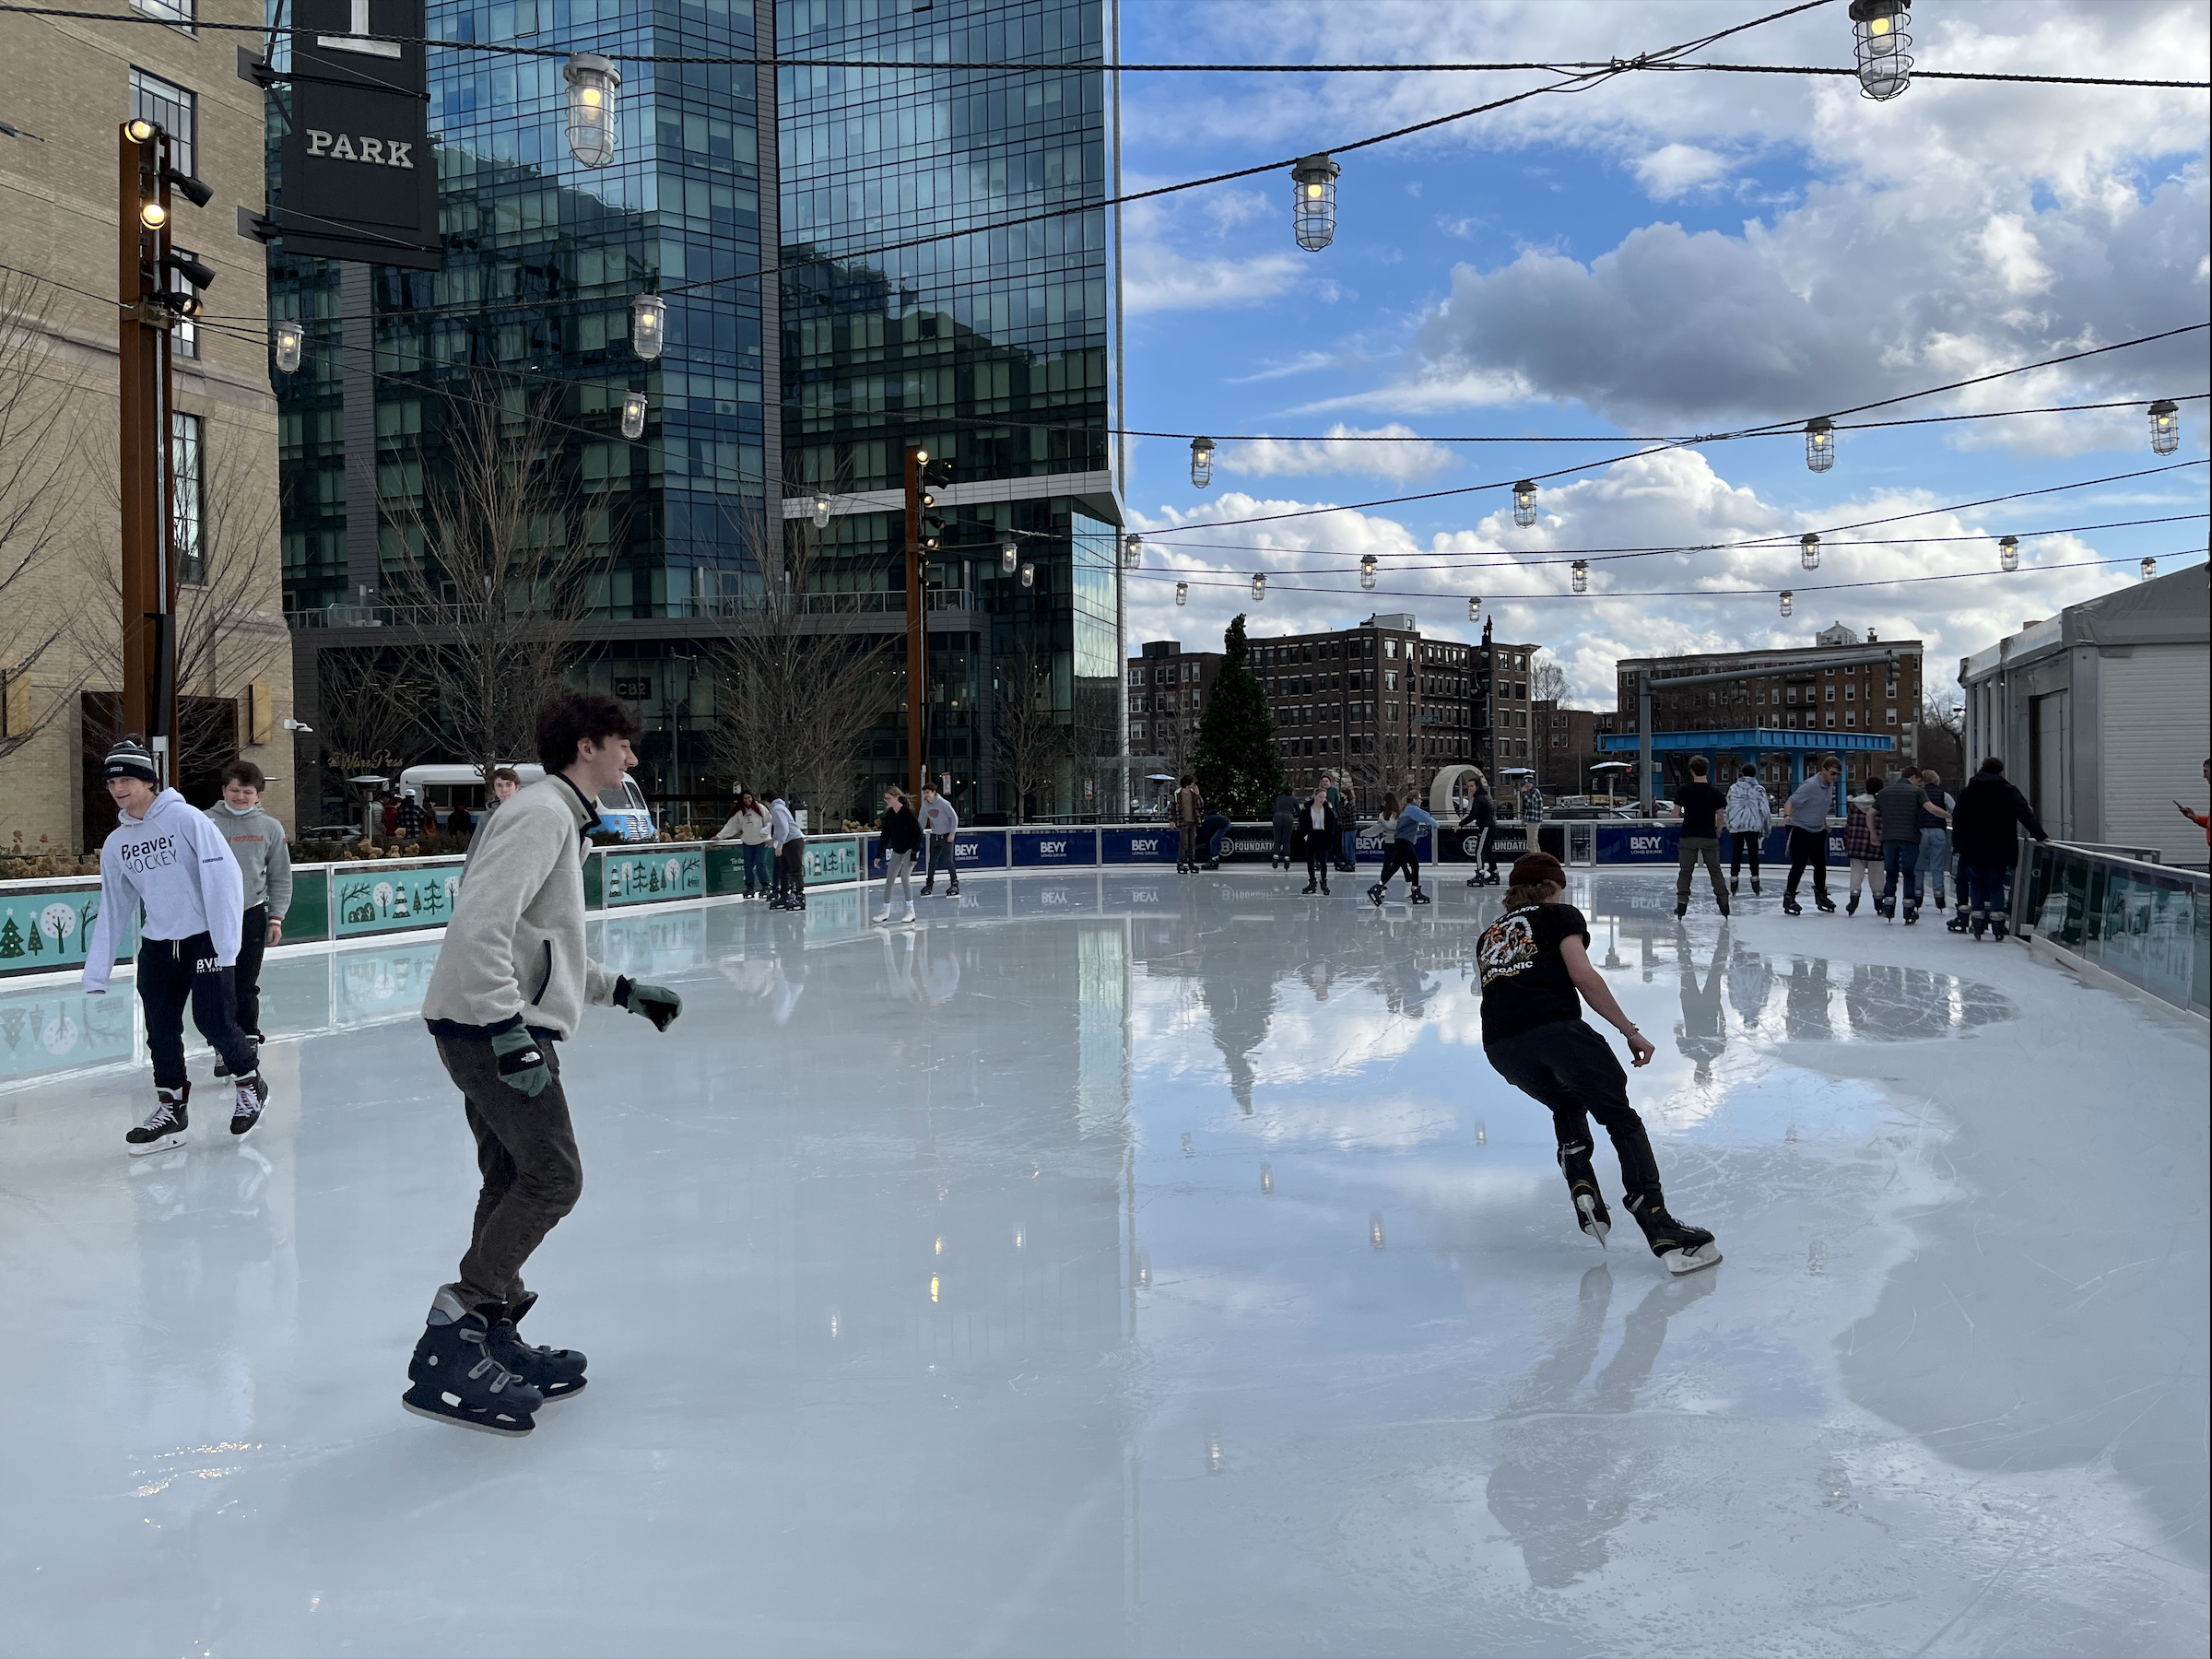 Senior Ice Skating Update